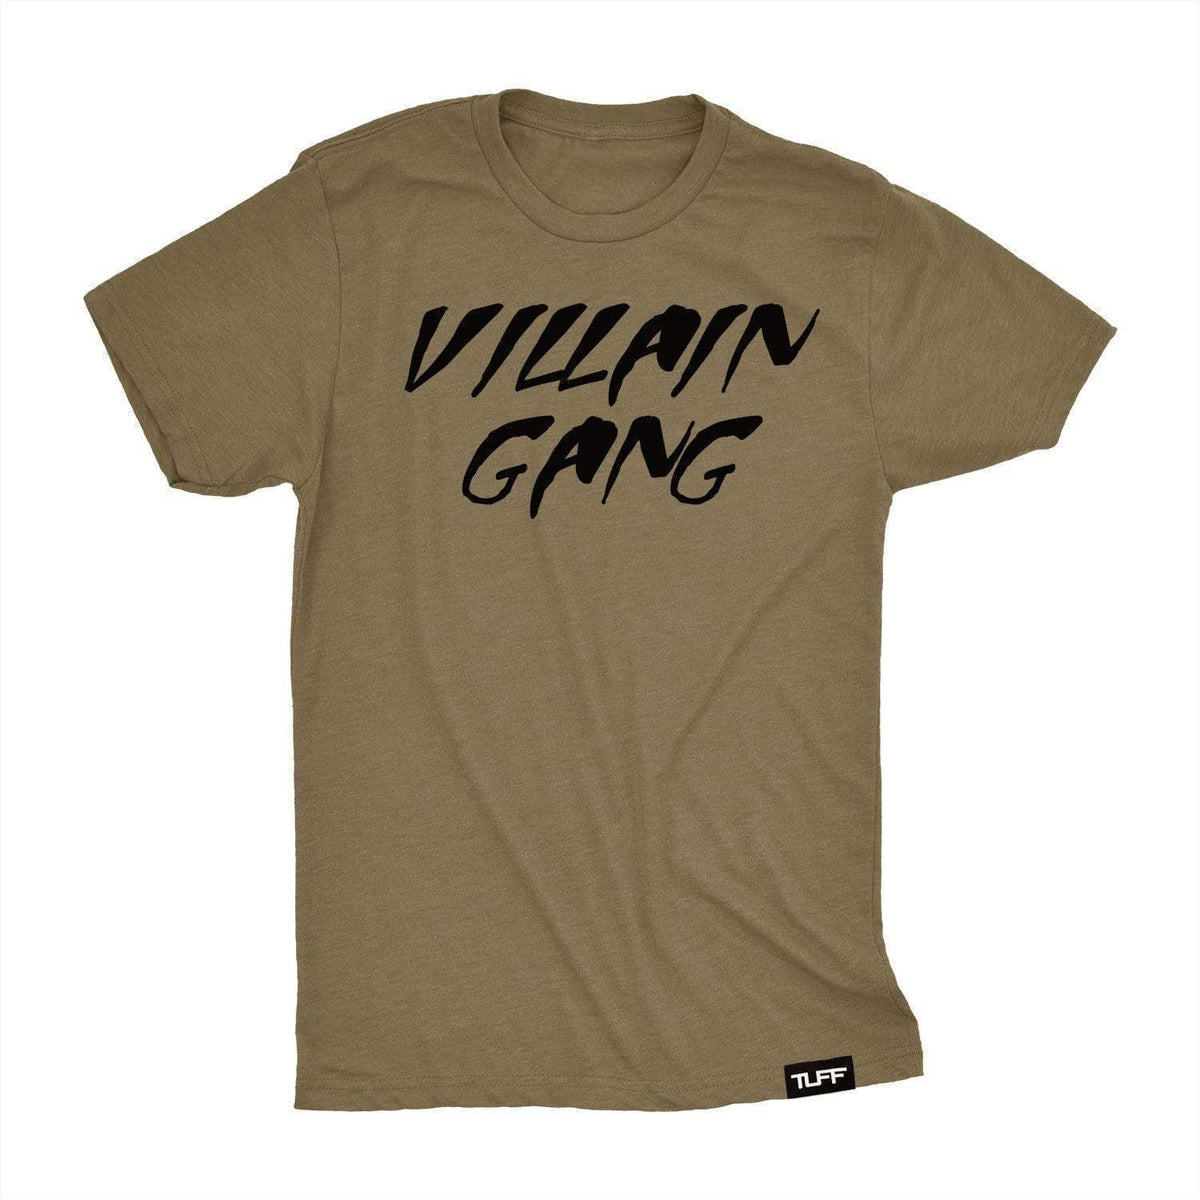 Villain Gang Tee S / Military Green TuffWraps.com